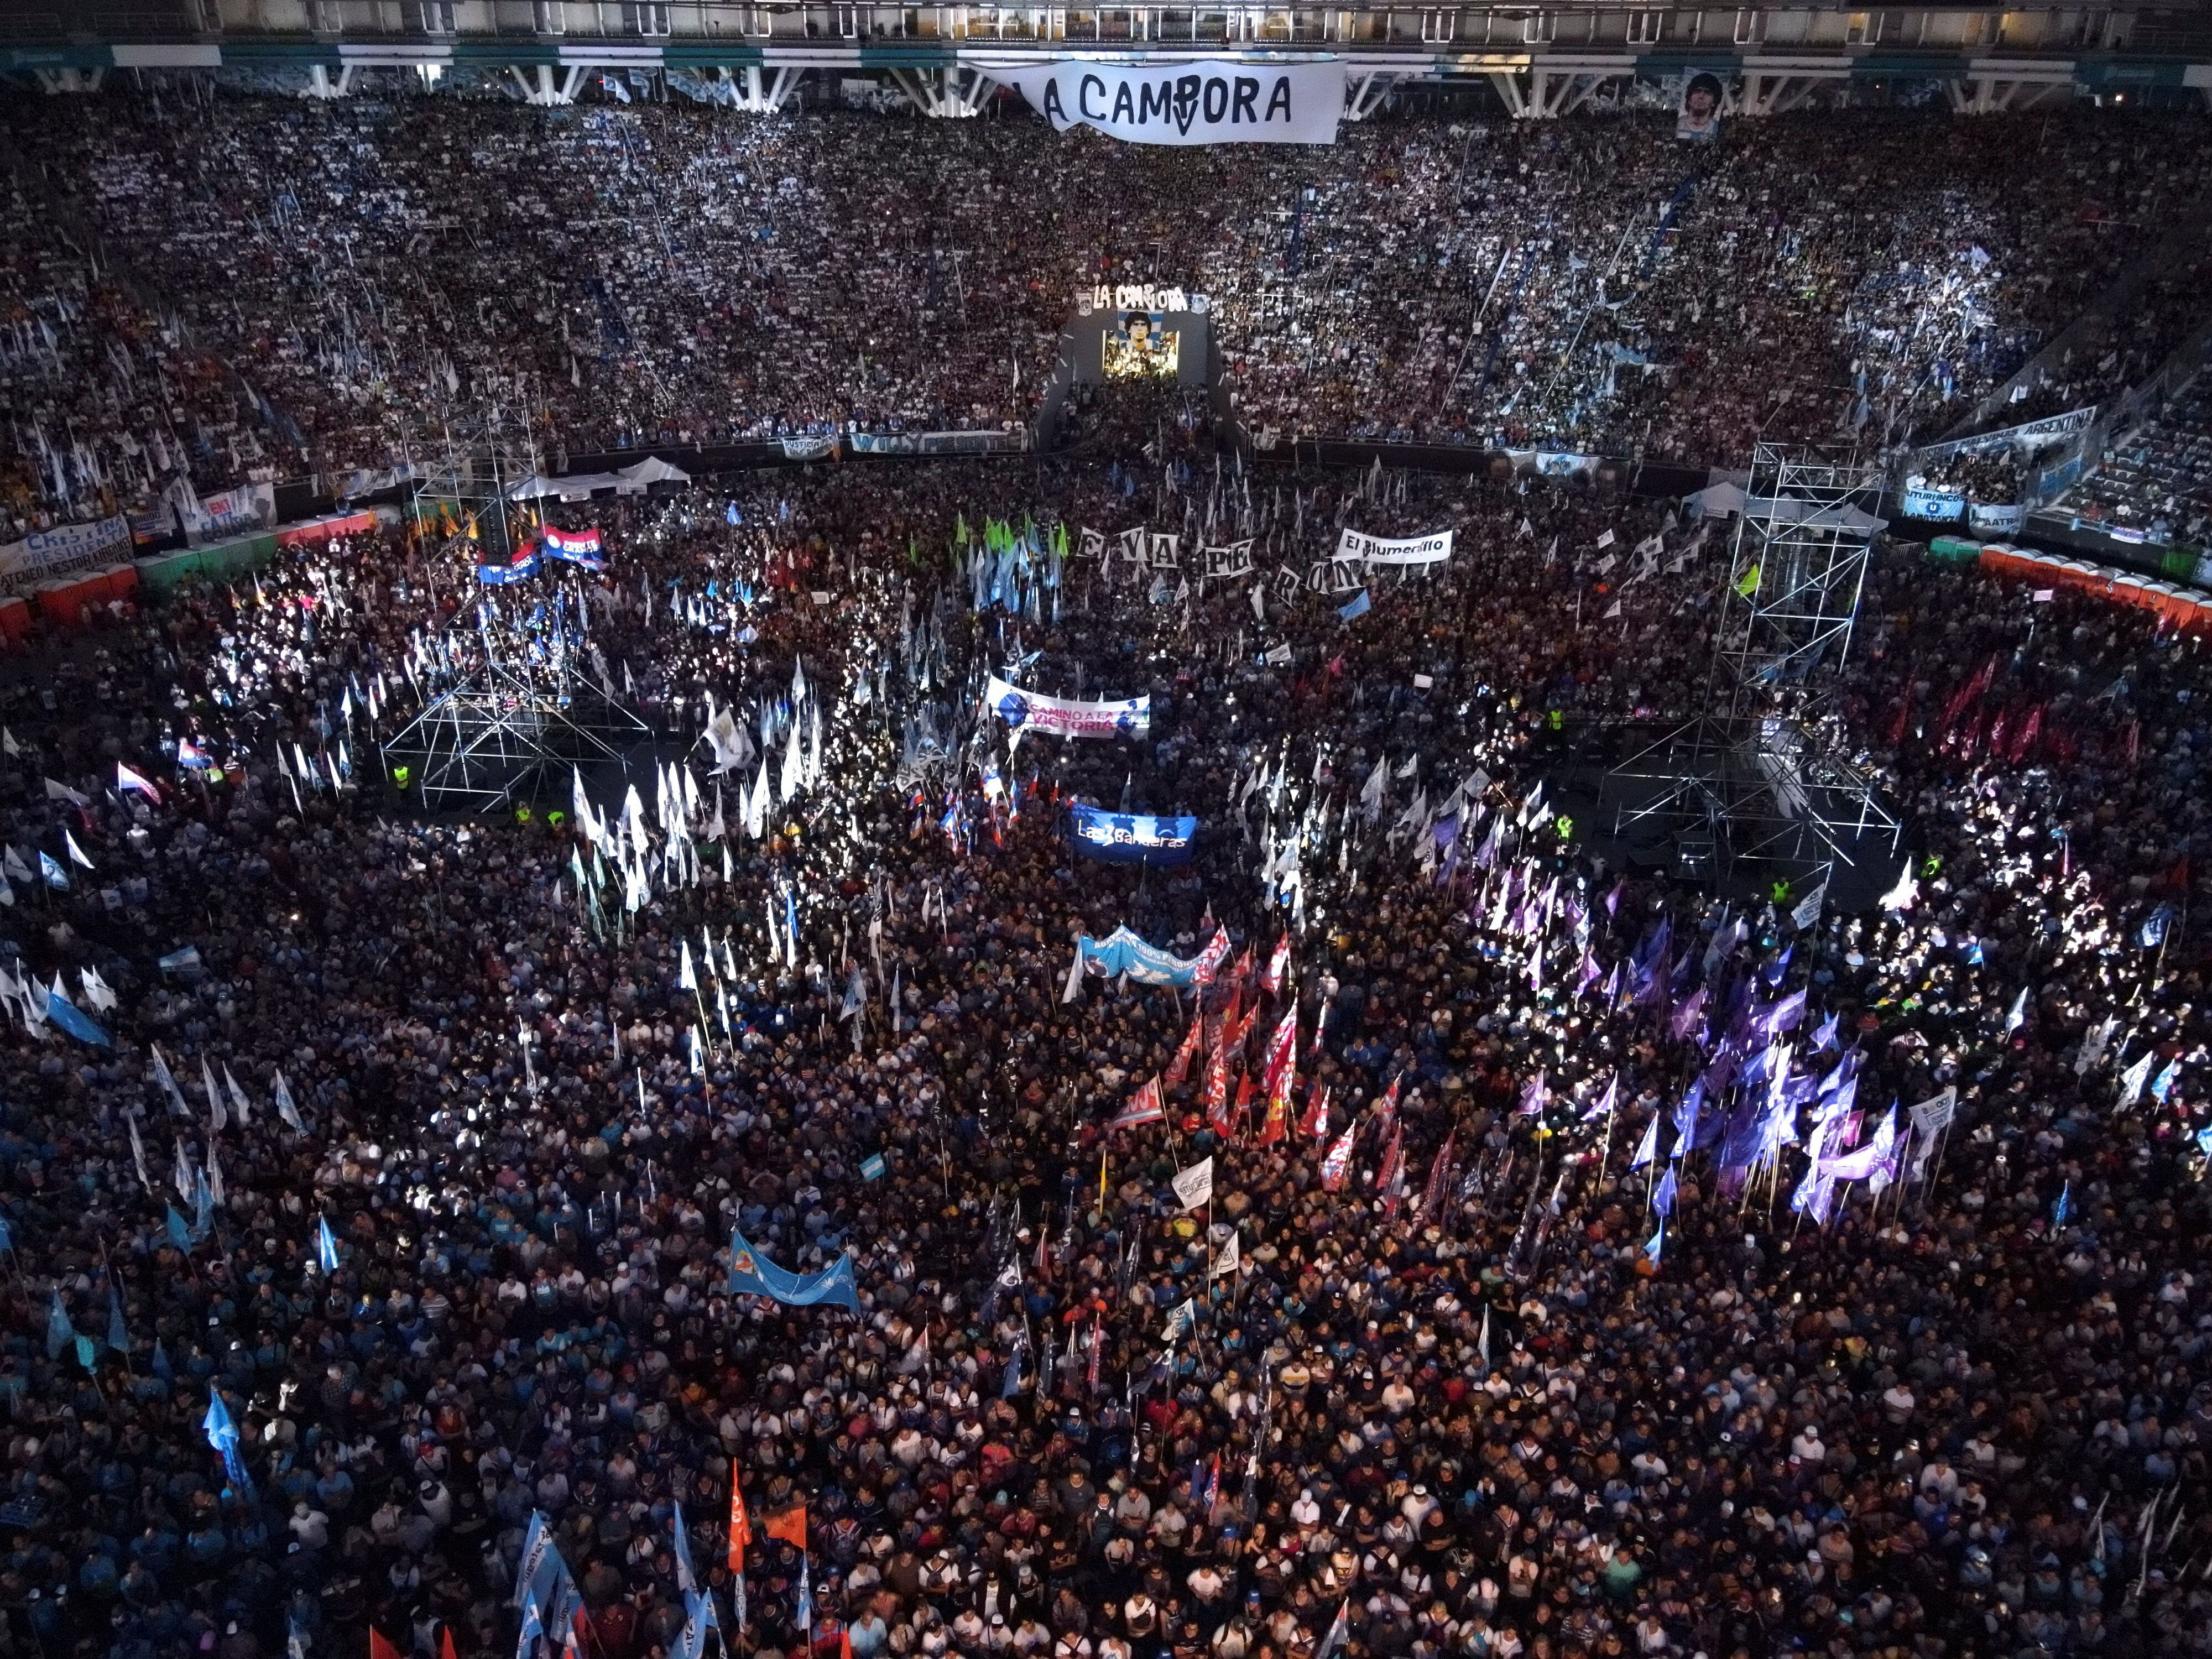 Militantes kirchneristas llenaron el estadio Diego Armando Maradona en La Plata para el acto que encabezó Cristina Kirchner  (REUTERS)